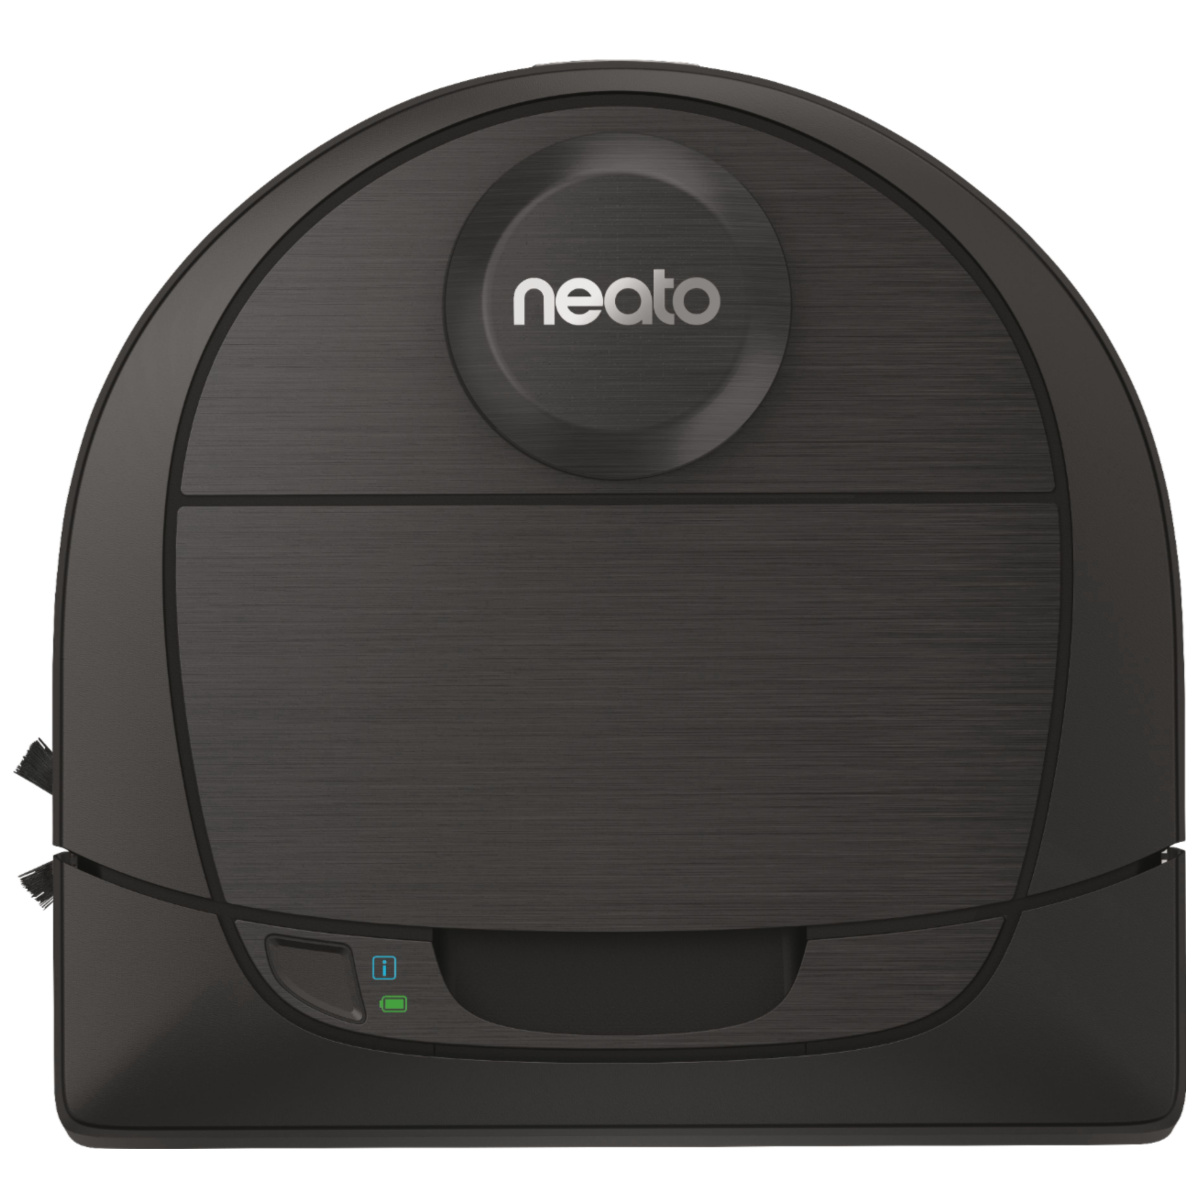 Neato Robotics 945-0308 Botvac D6 Wi-Fi Connected Robot Vacuum